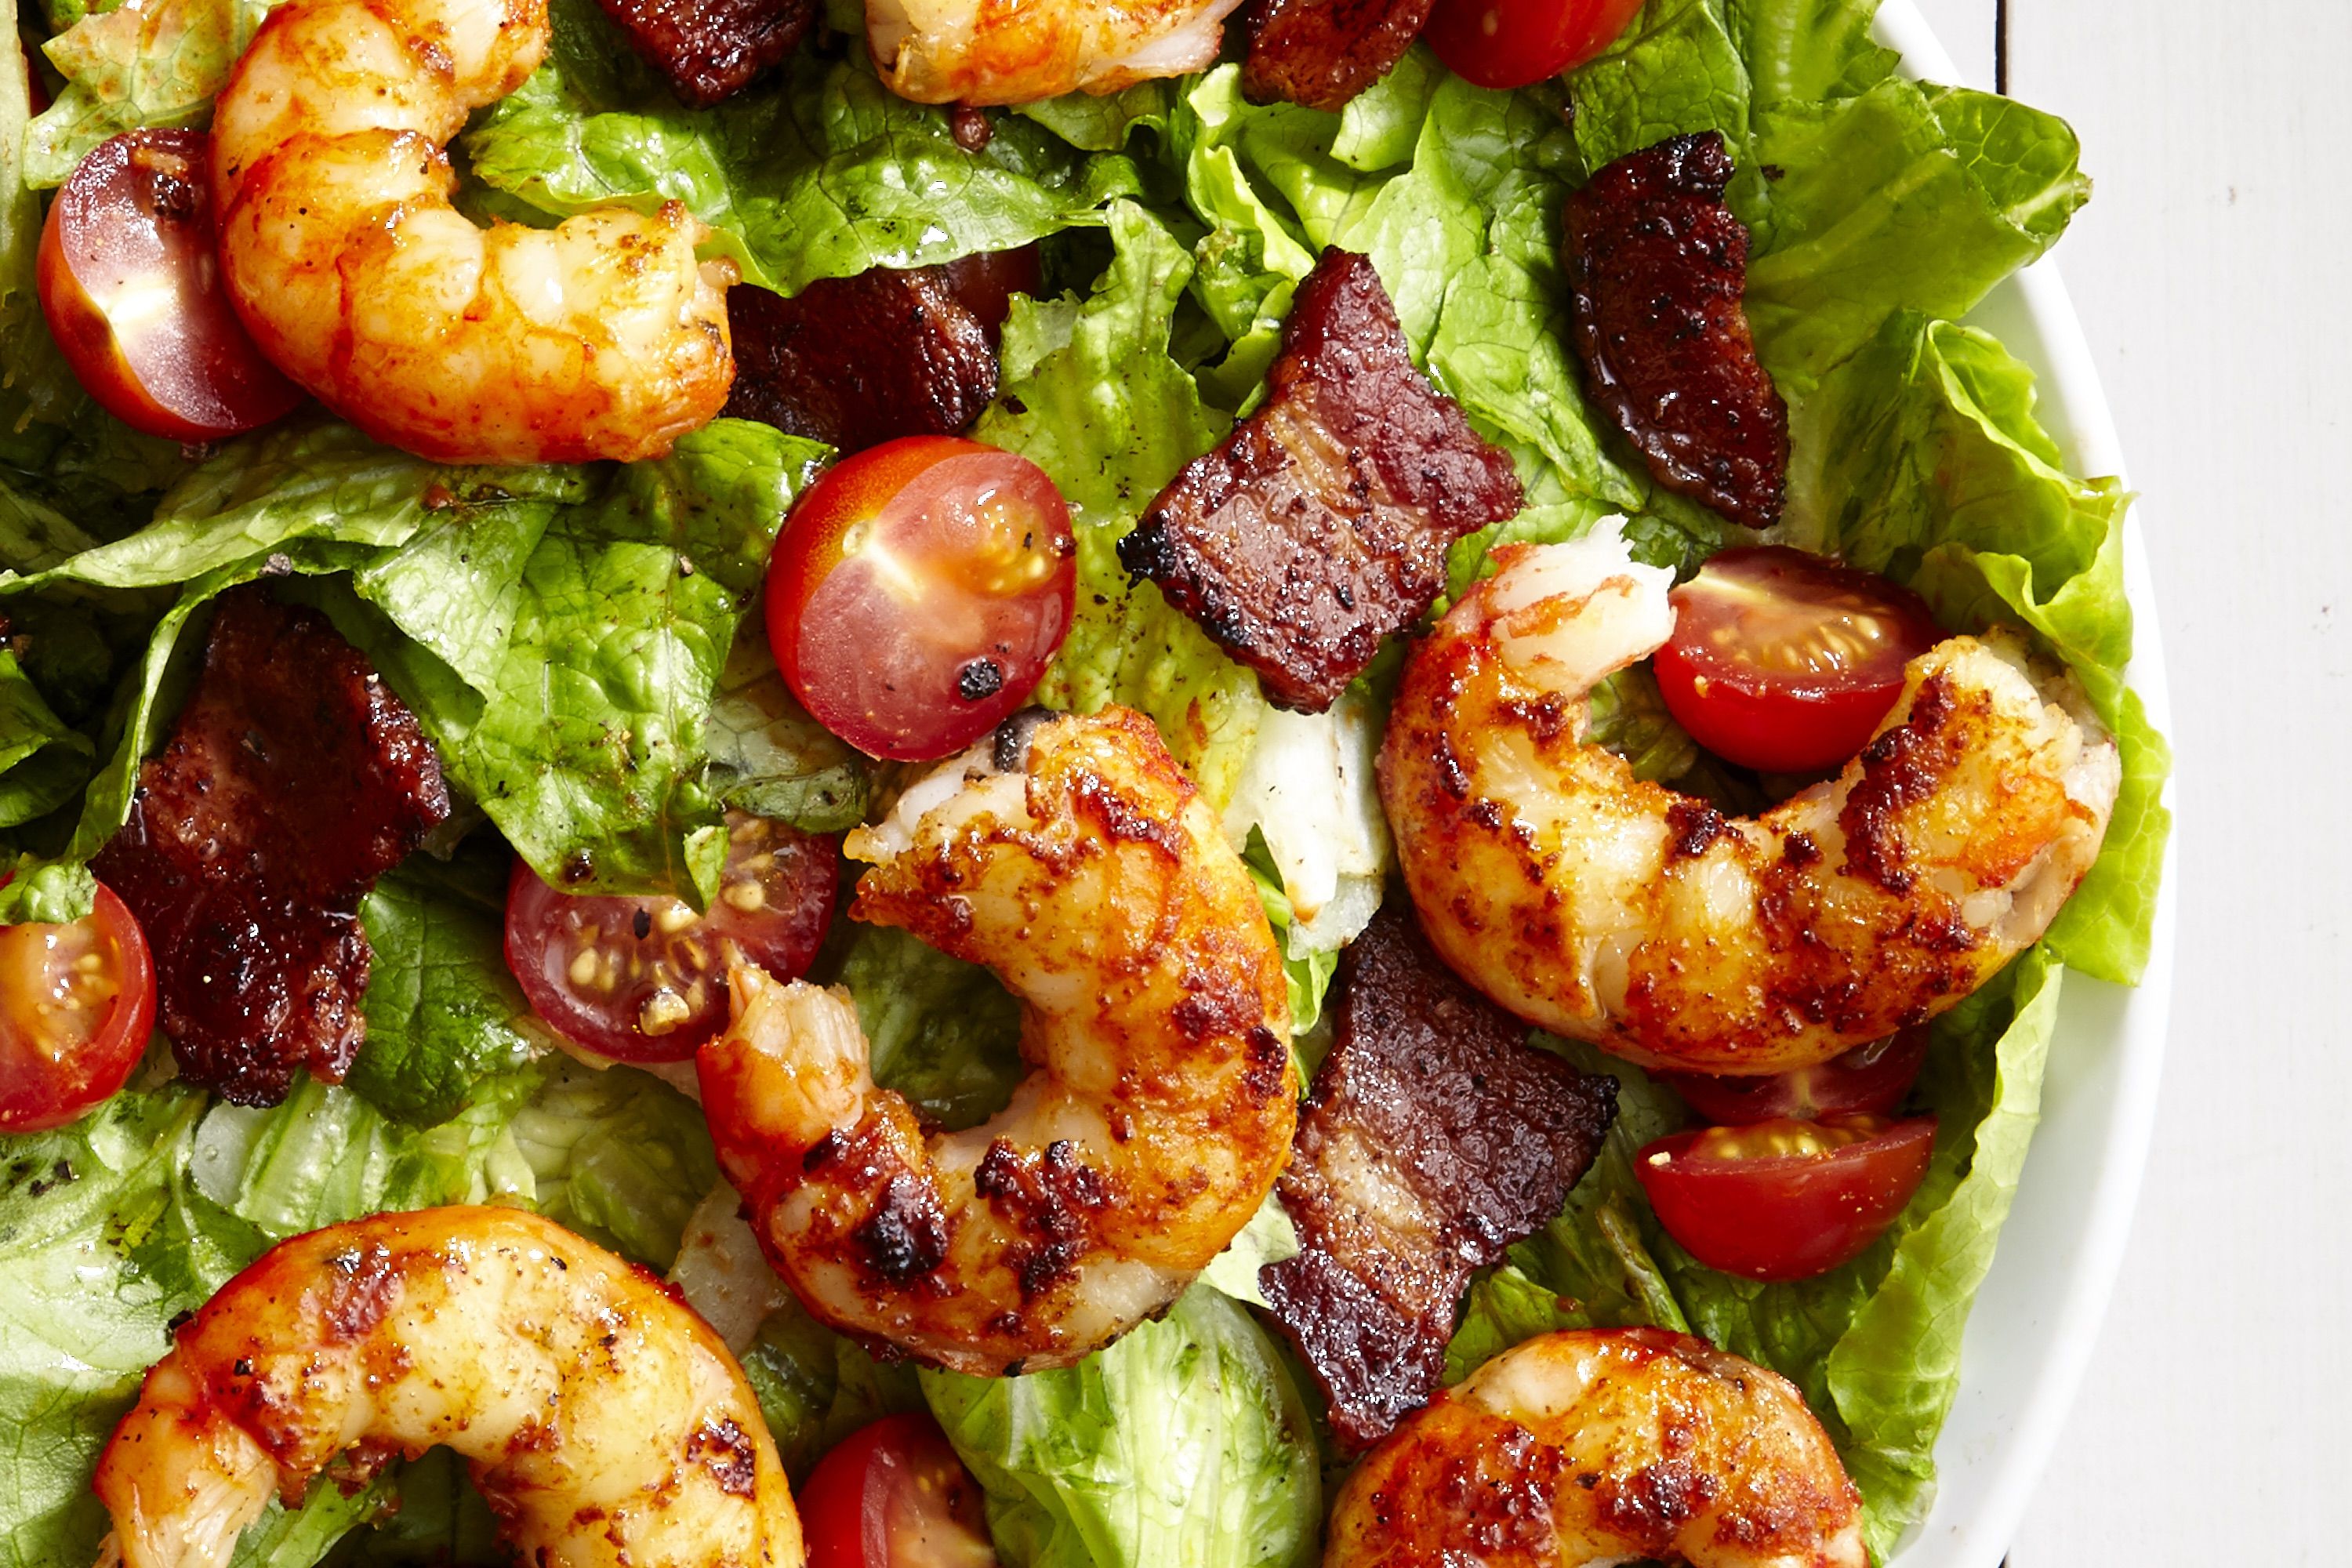 Best Shrimp Salad Recipe - How To Make Shrimp Salad